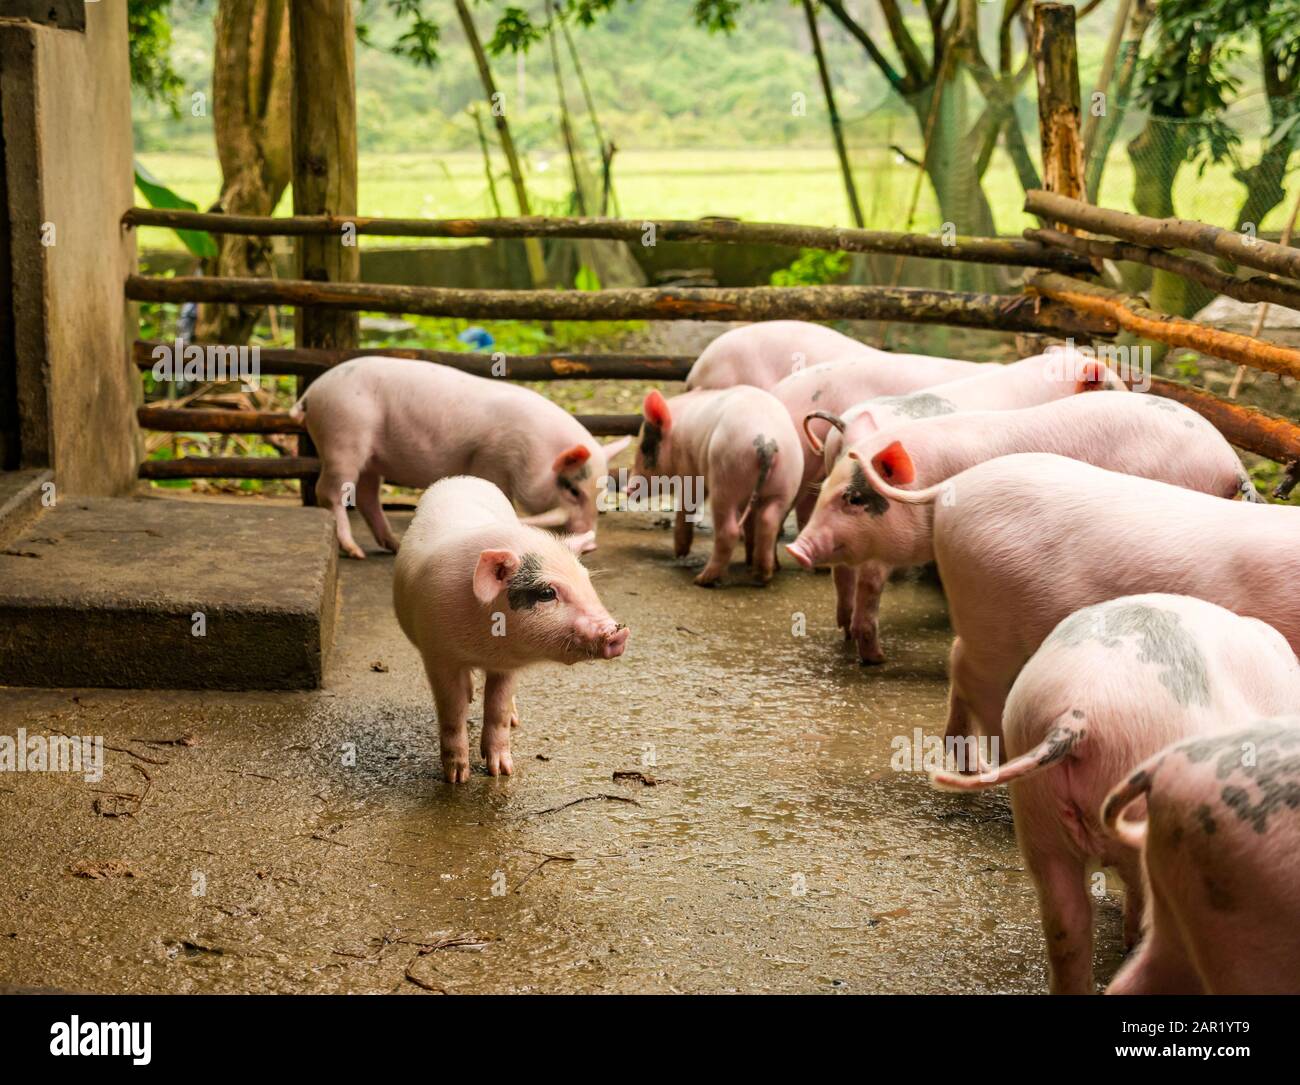 Piglets in farmyard enclosure, Viet Hai village, Cat Ba Island, Vietnam, Asia Stock Photo